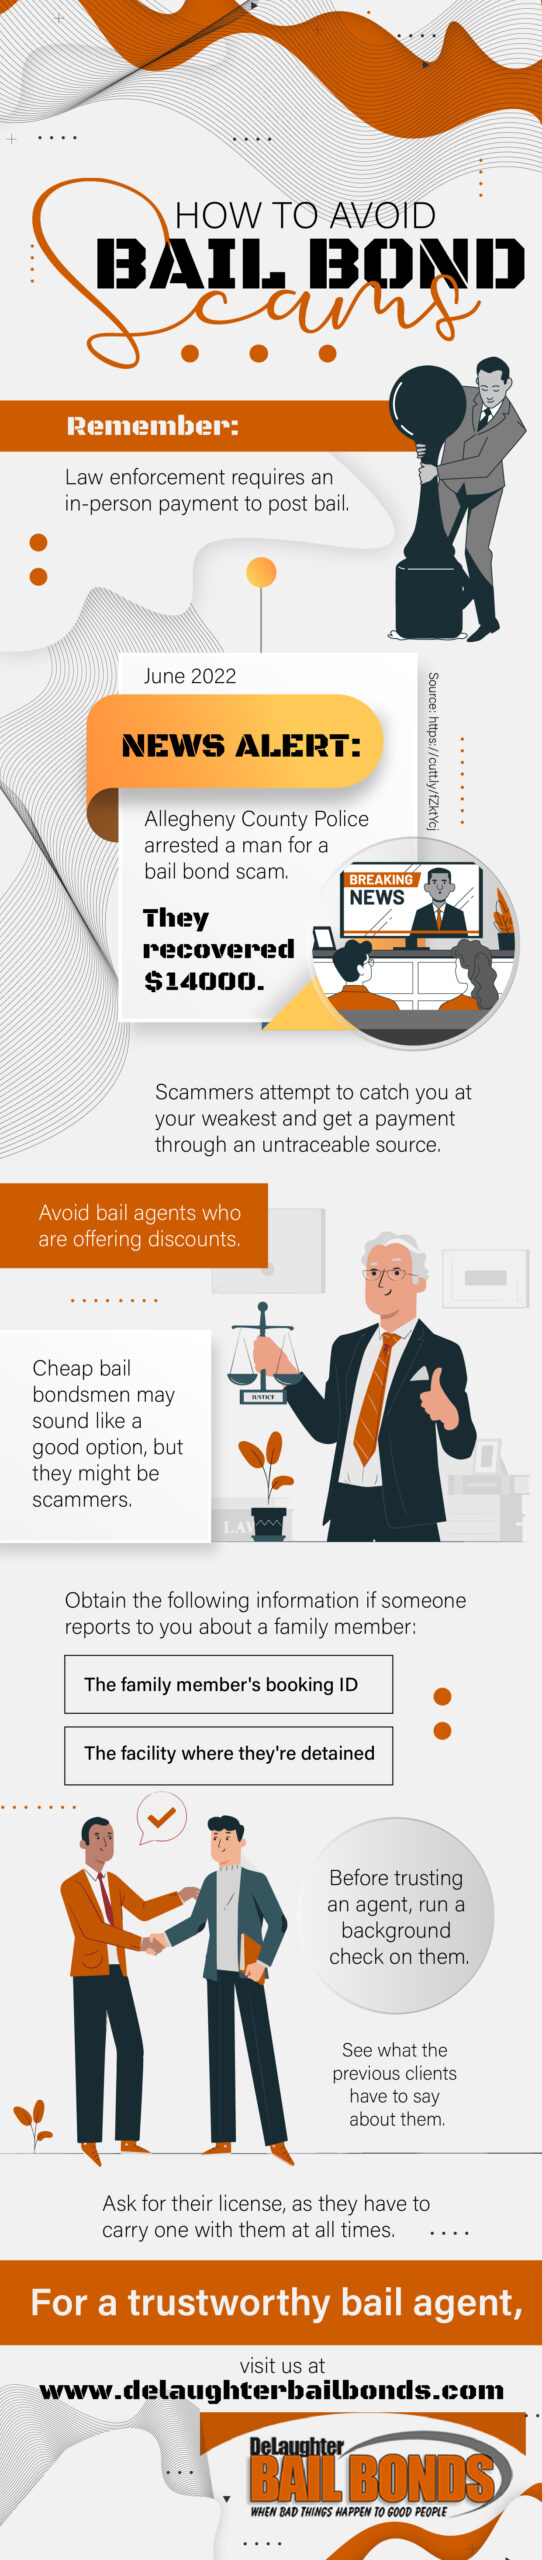 How to Avoid Bail Bond Scams